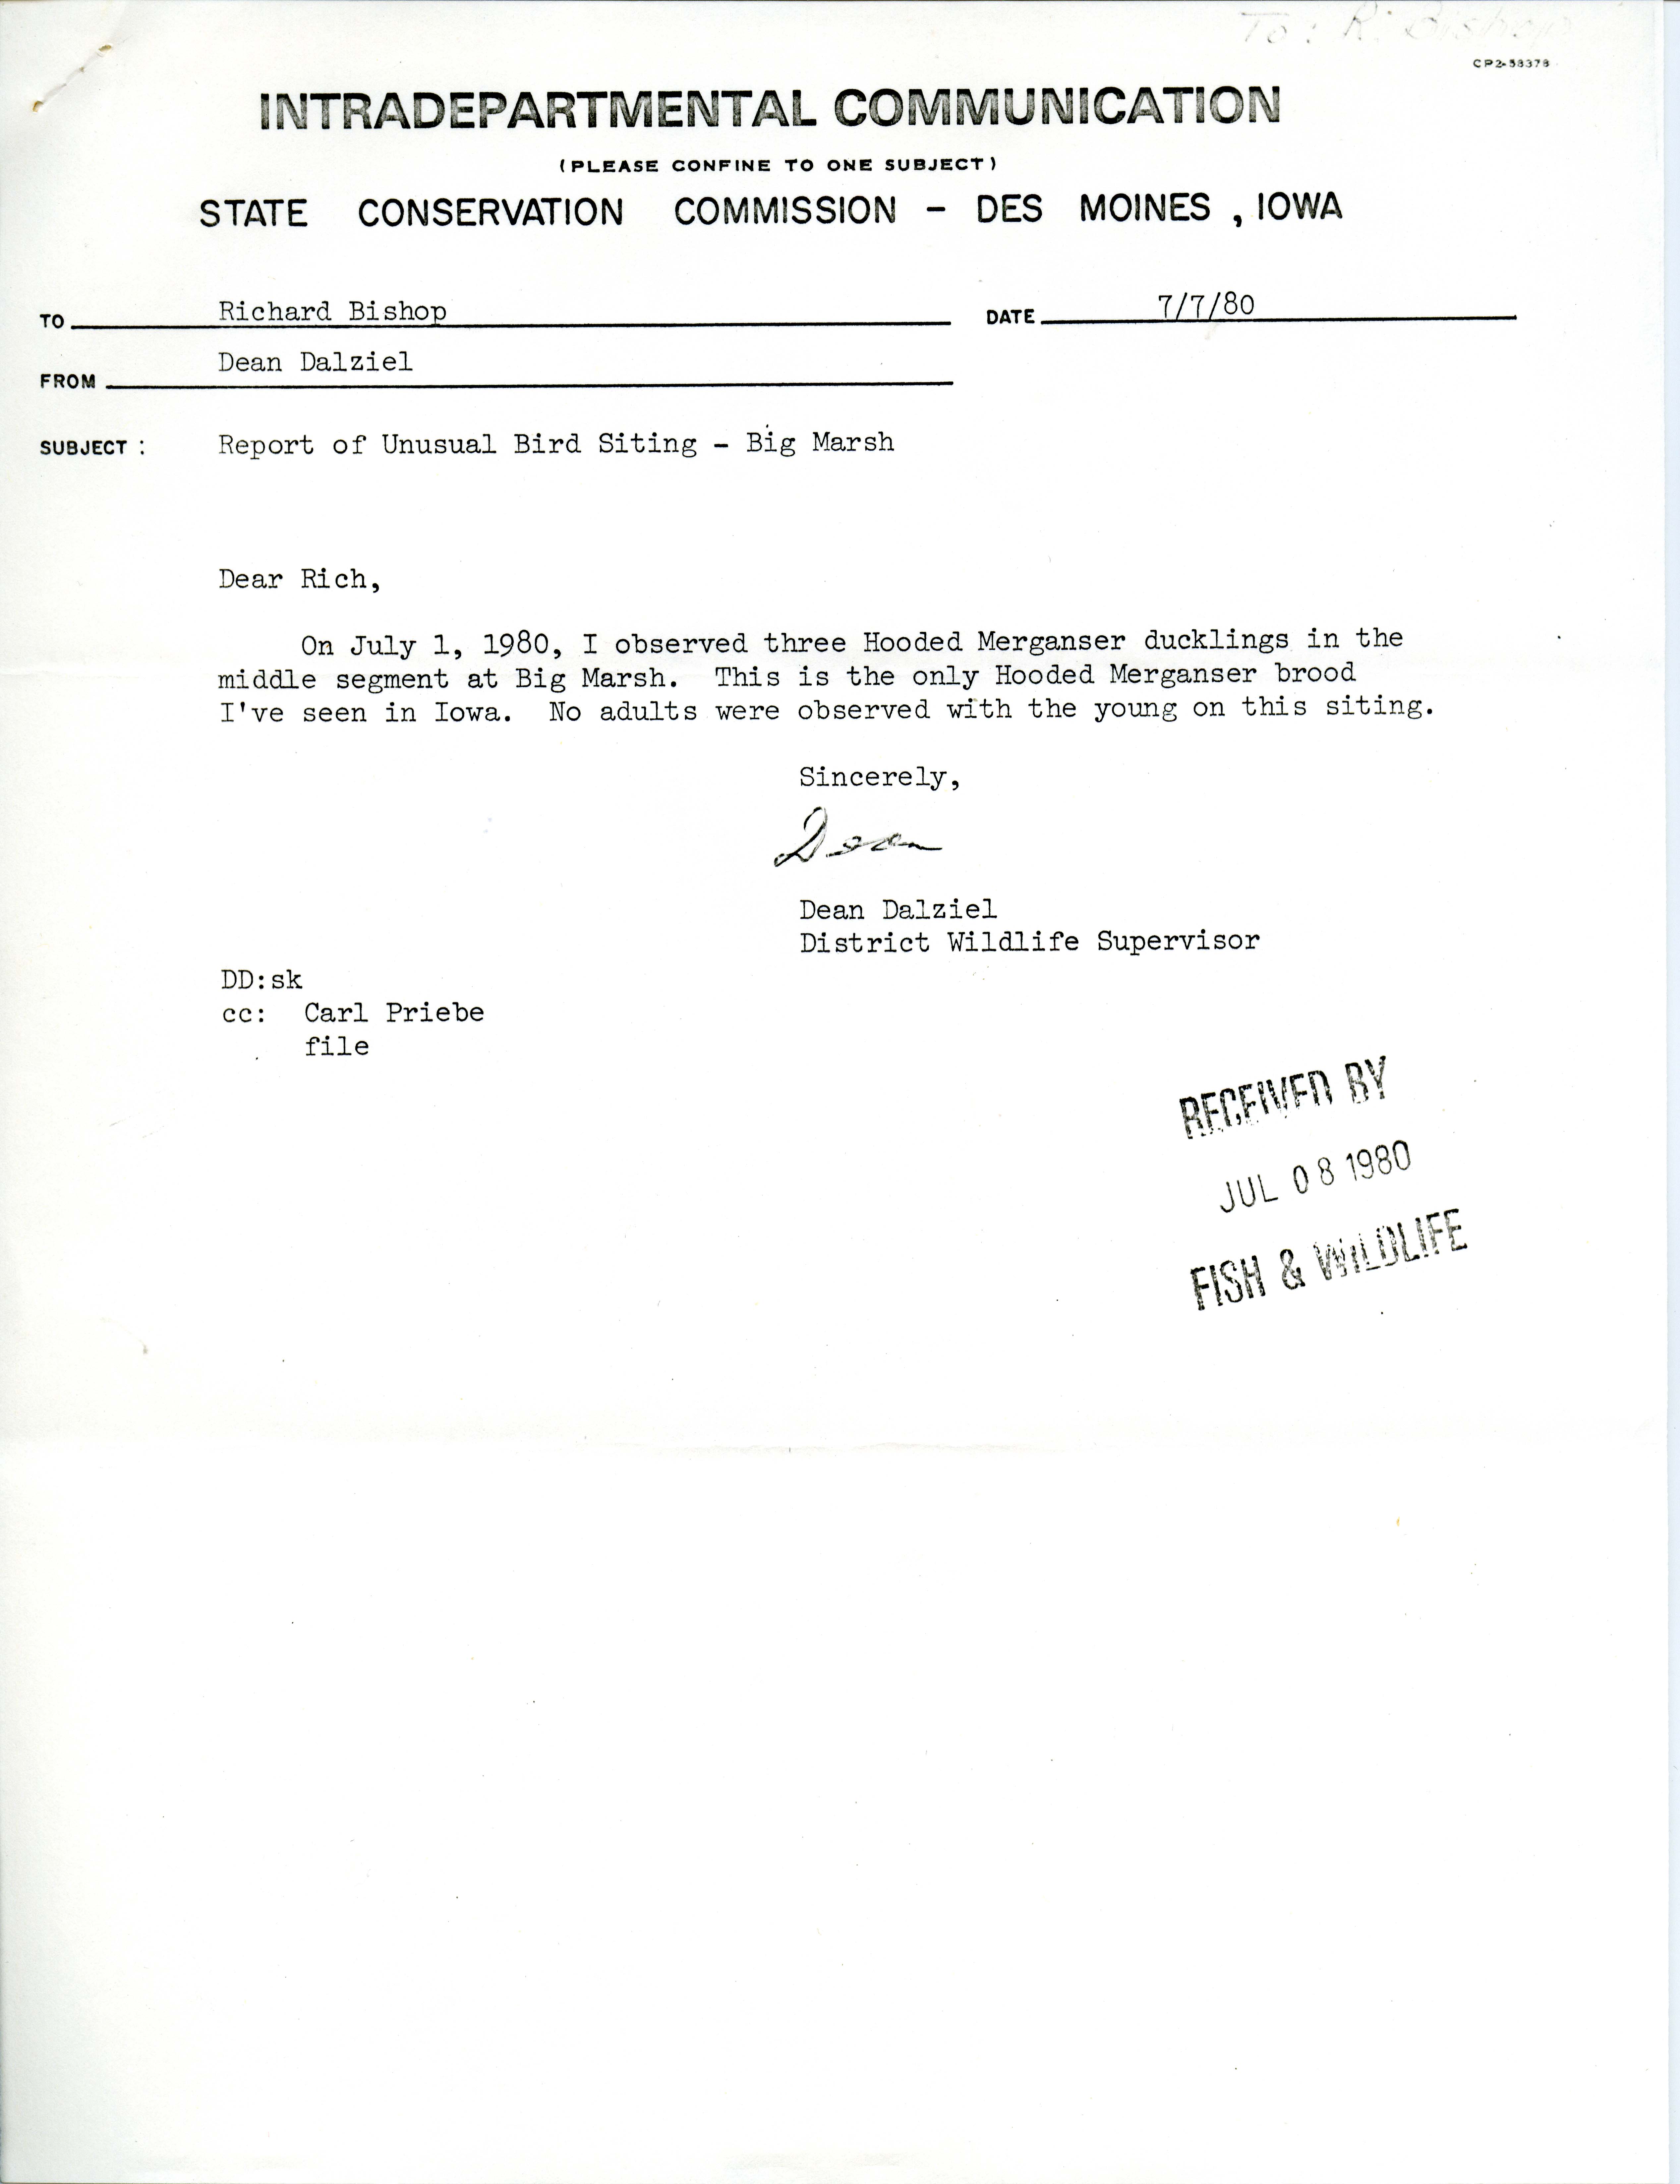 Dean Dalziel letter to Richard Bishop regarding unusual bird sighting, July 7, 1980